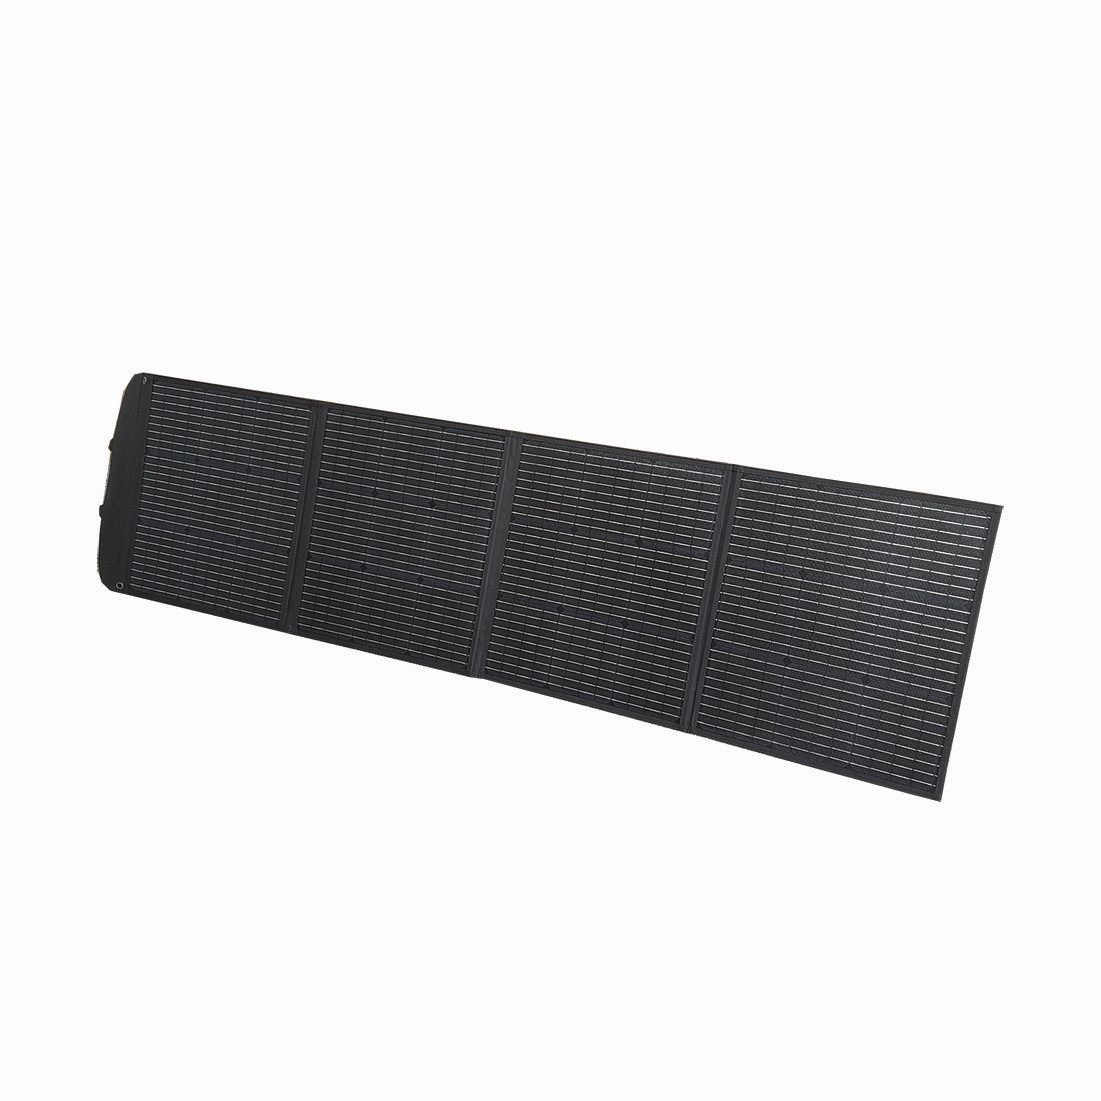 AGENT TSP21V160W Foldable Solar Panel 160W, 21.5V